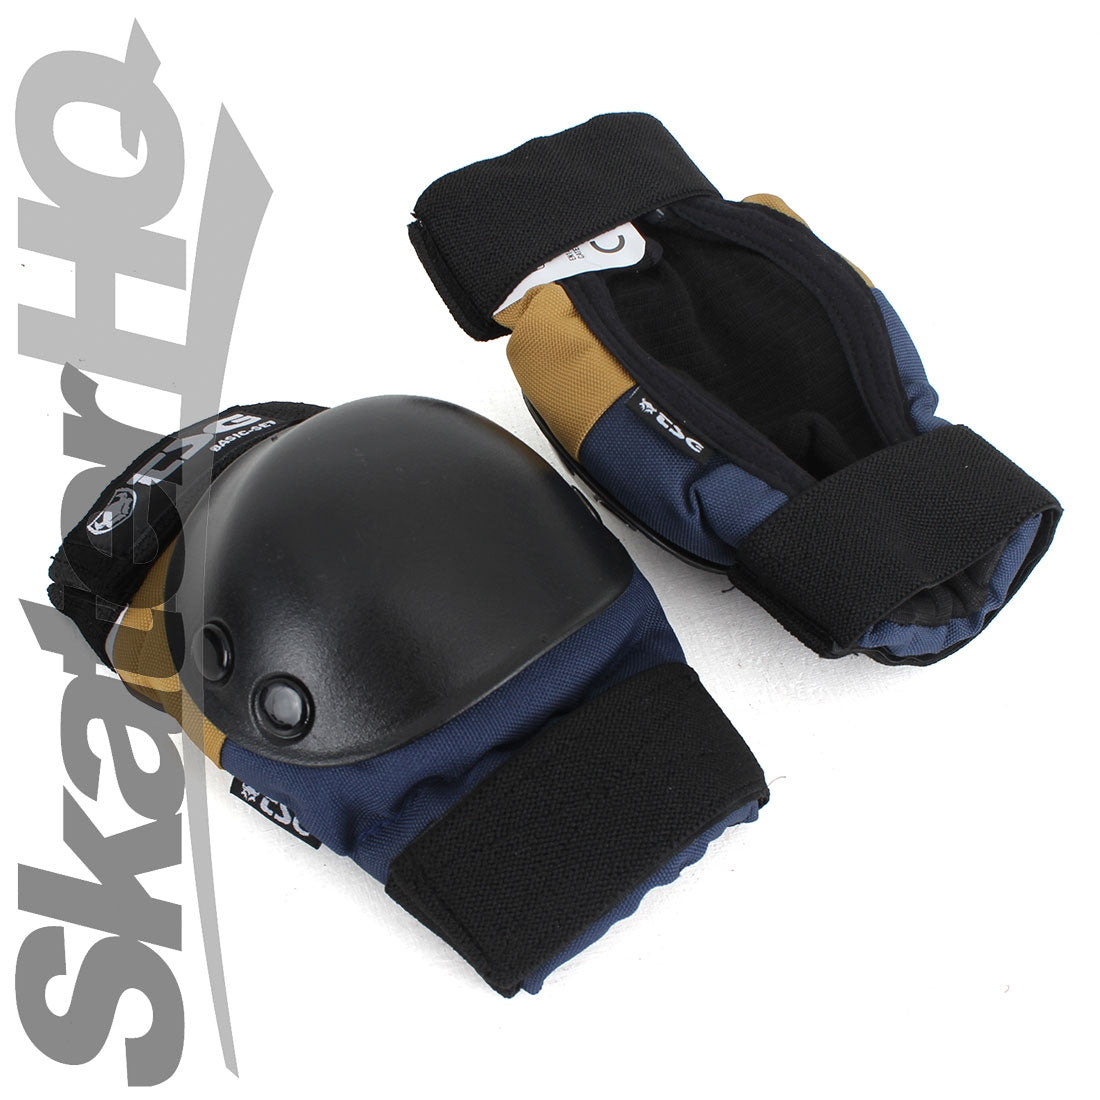 TSG Basic Skate Set Navy/Tan - Large Protective Gear